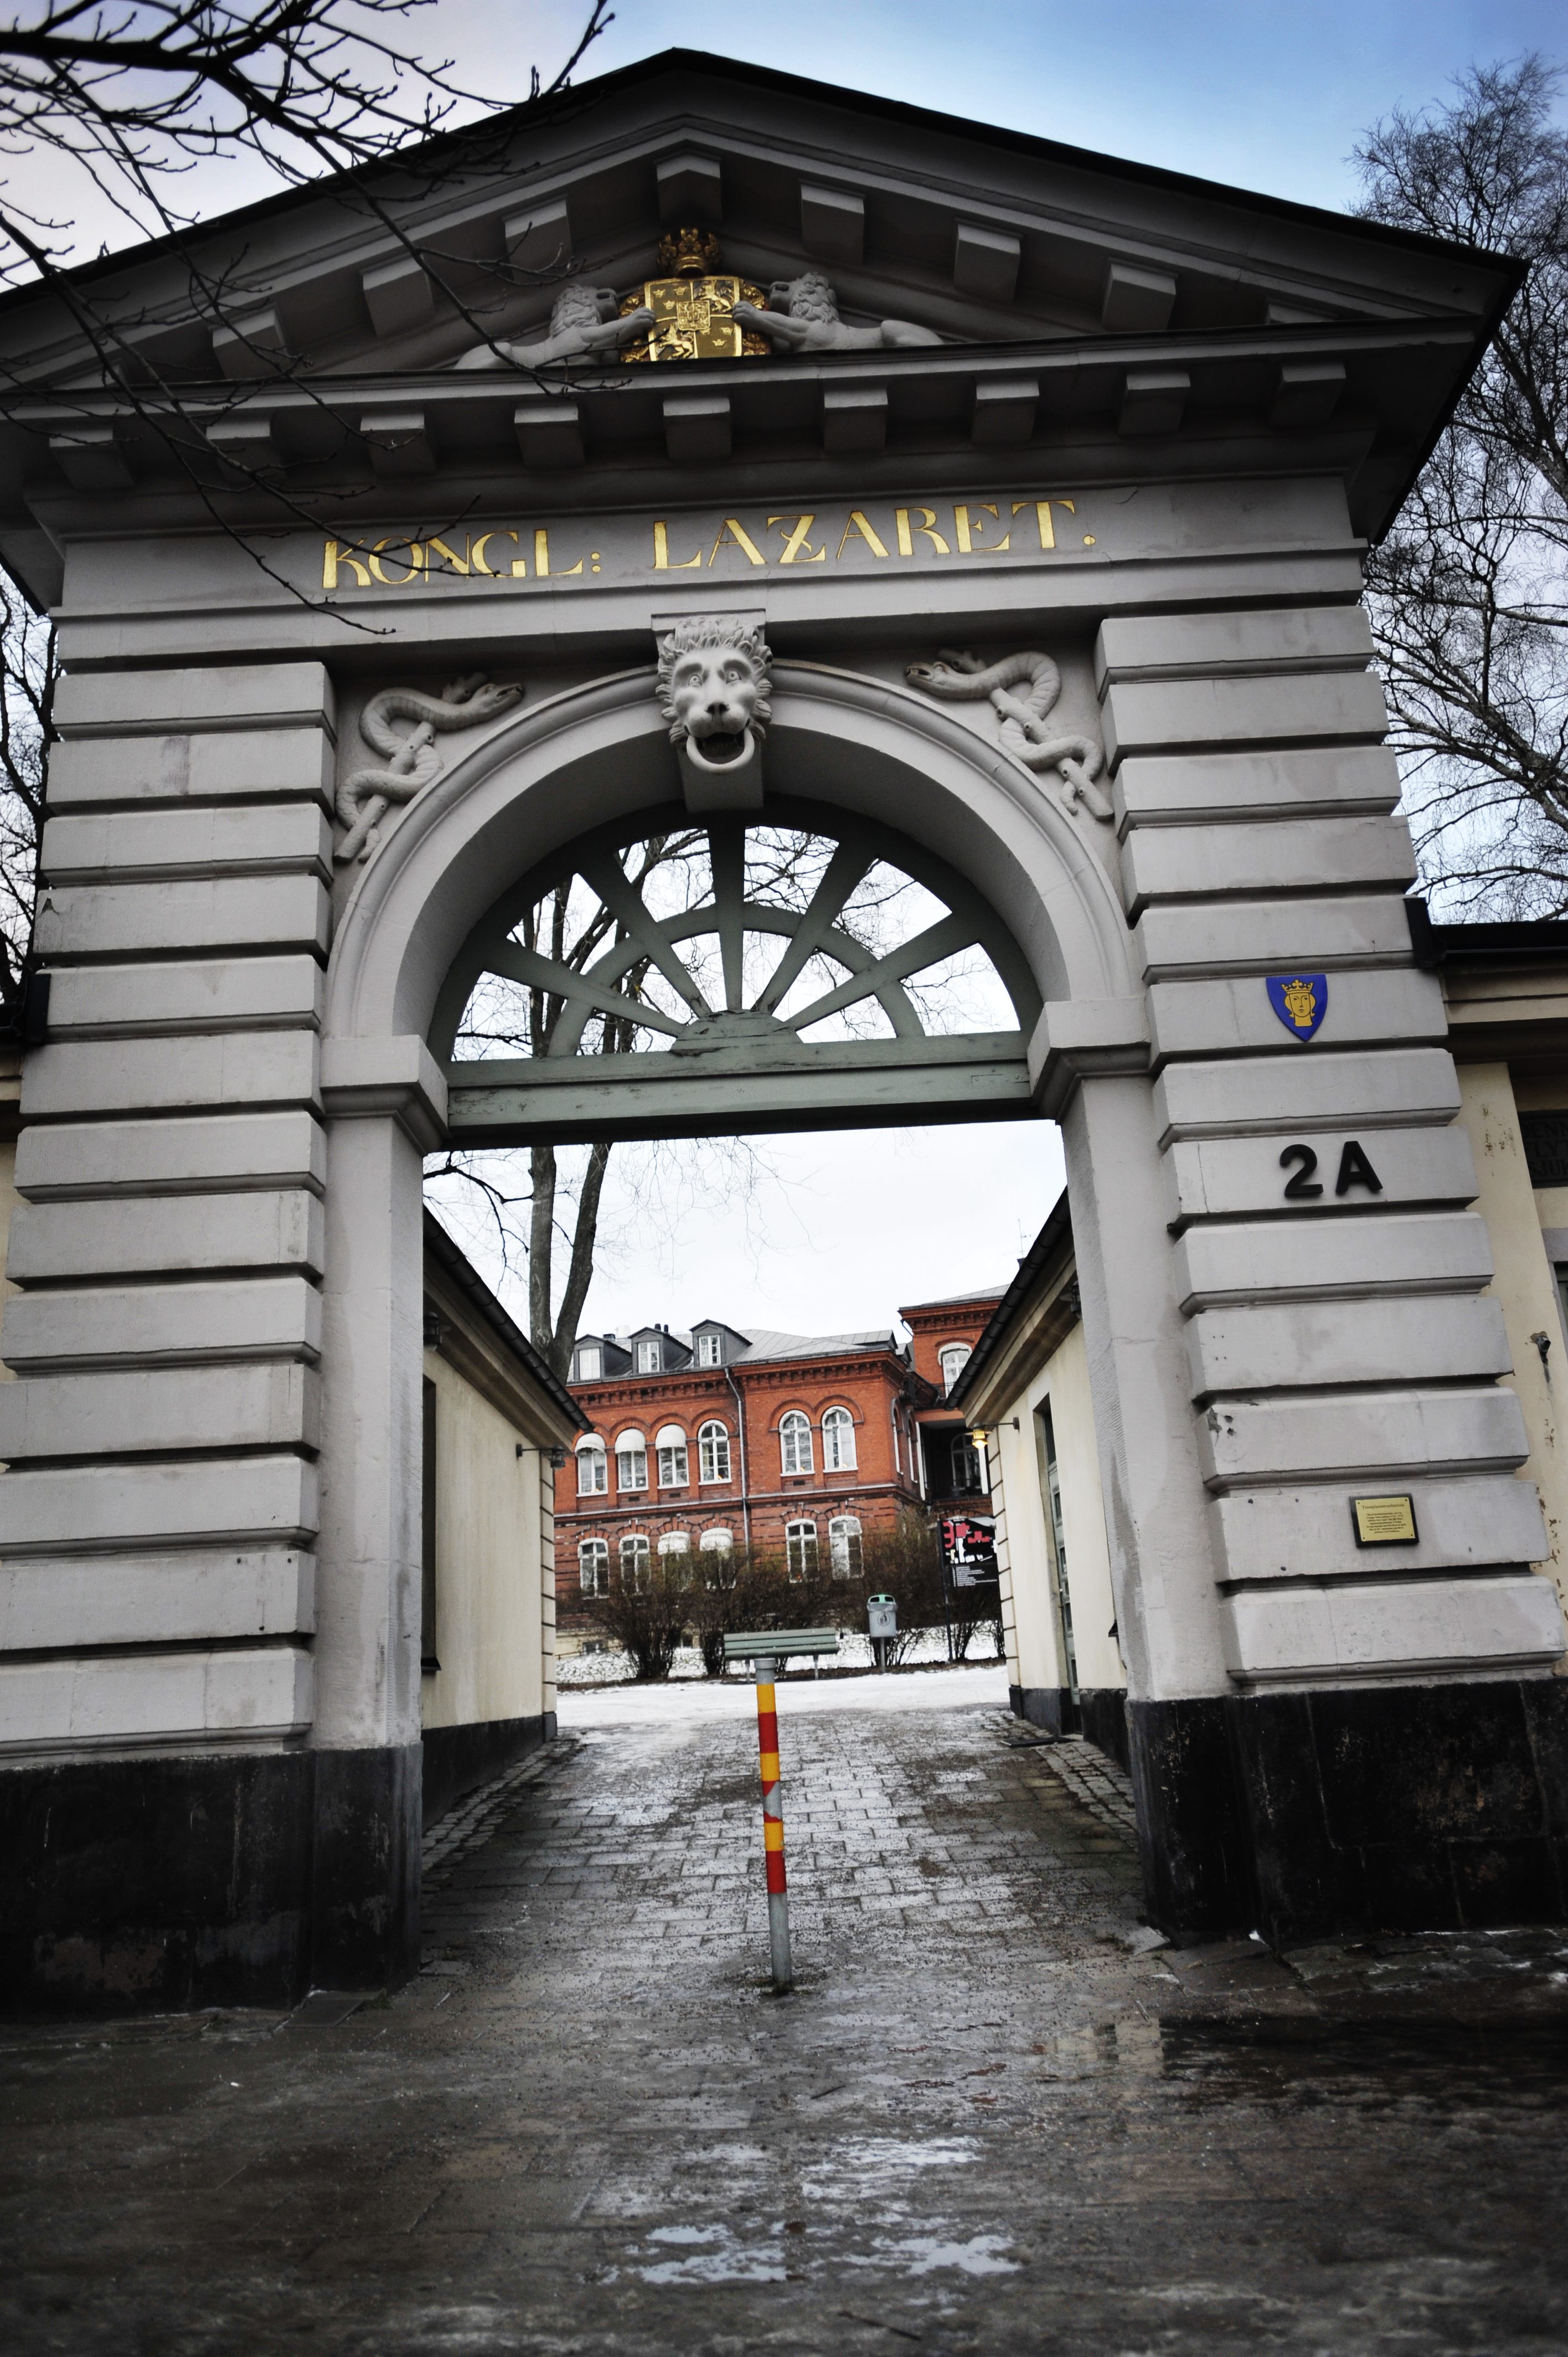 Porten som leder in till 1700-talssjukhuset Serafen på Kungsholmen i centrala Stockholm.